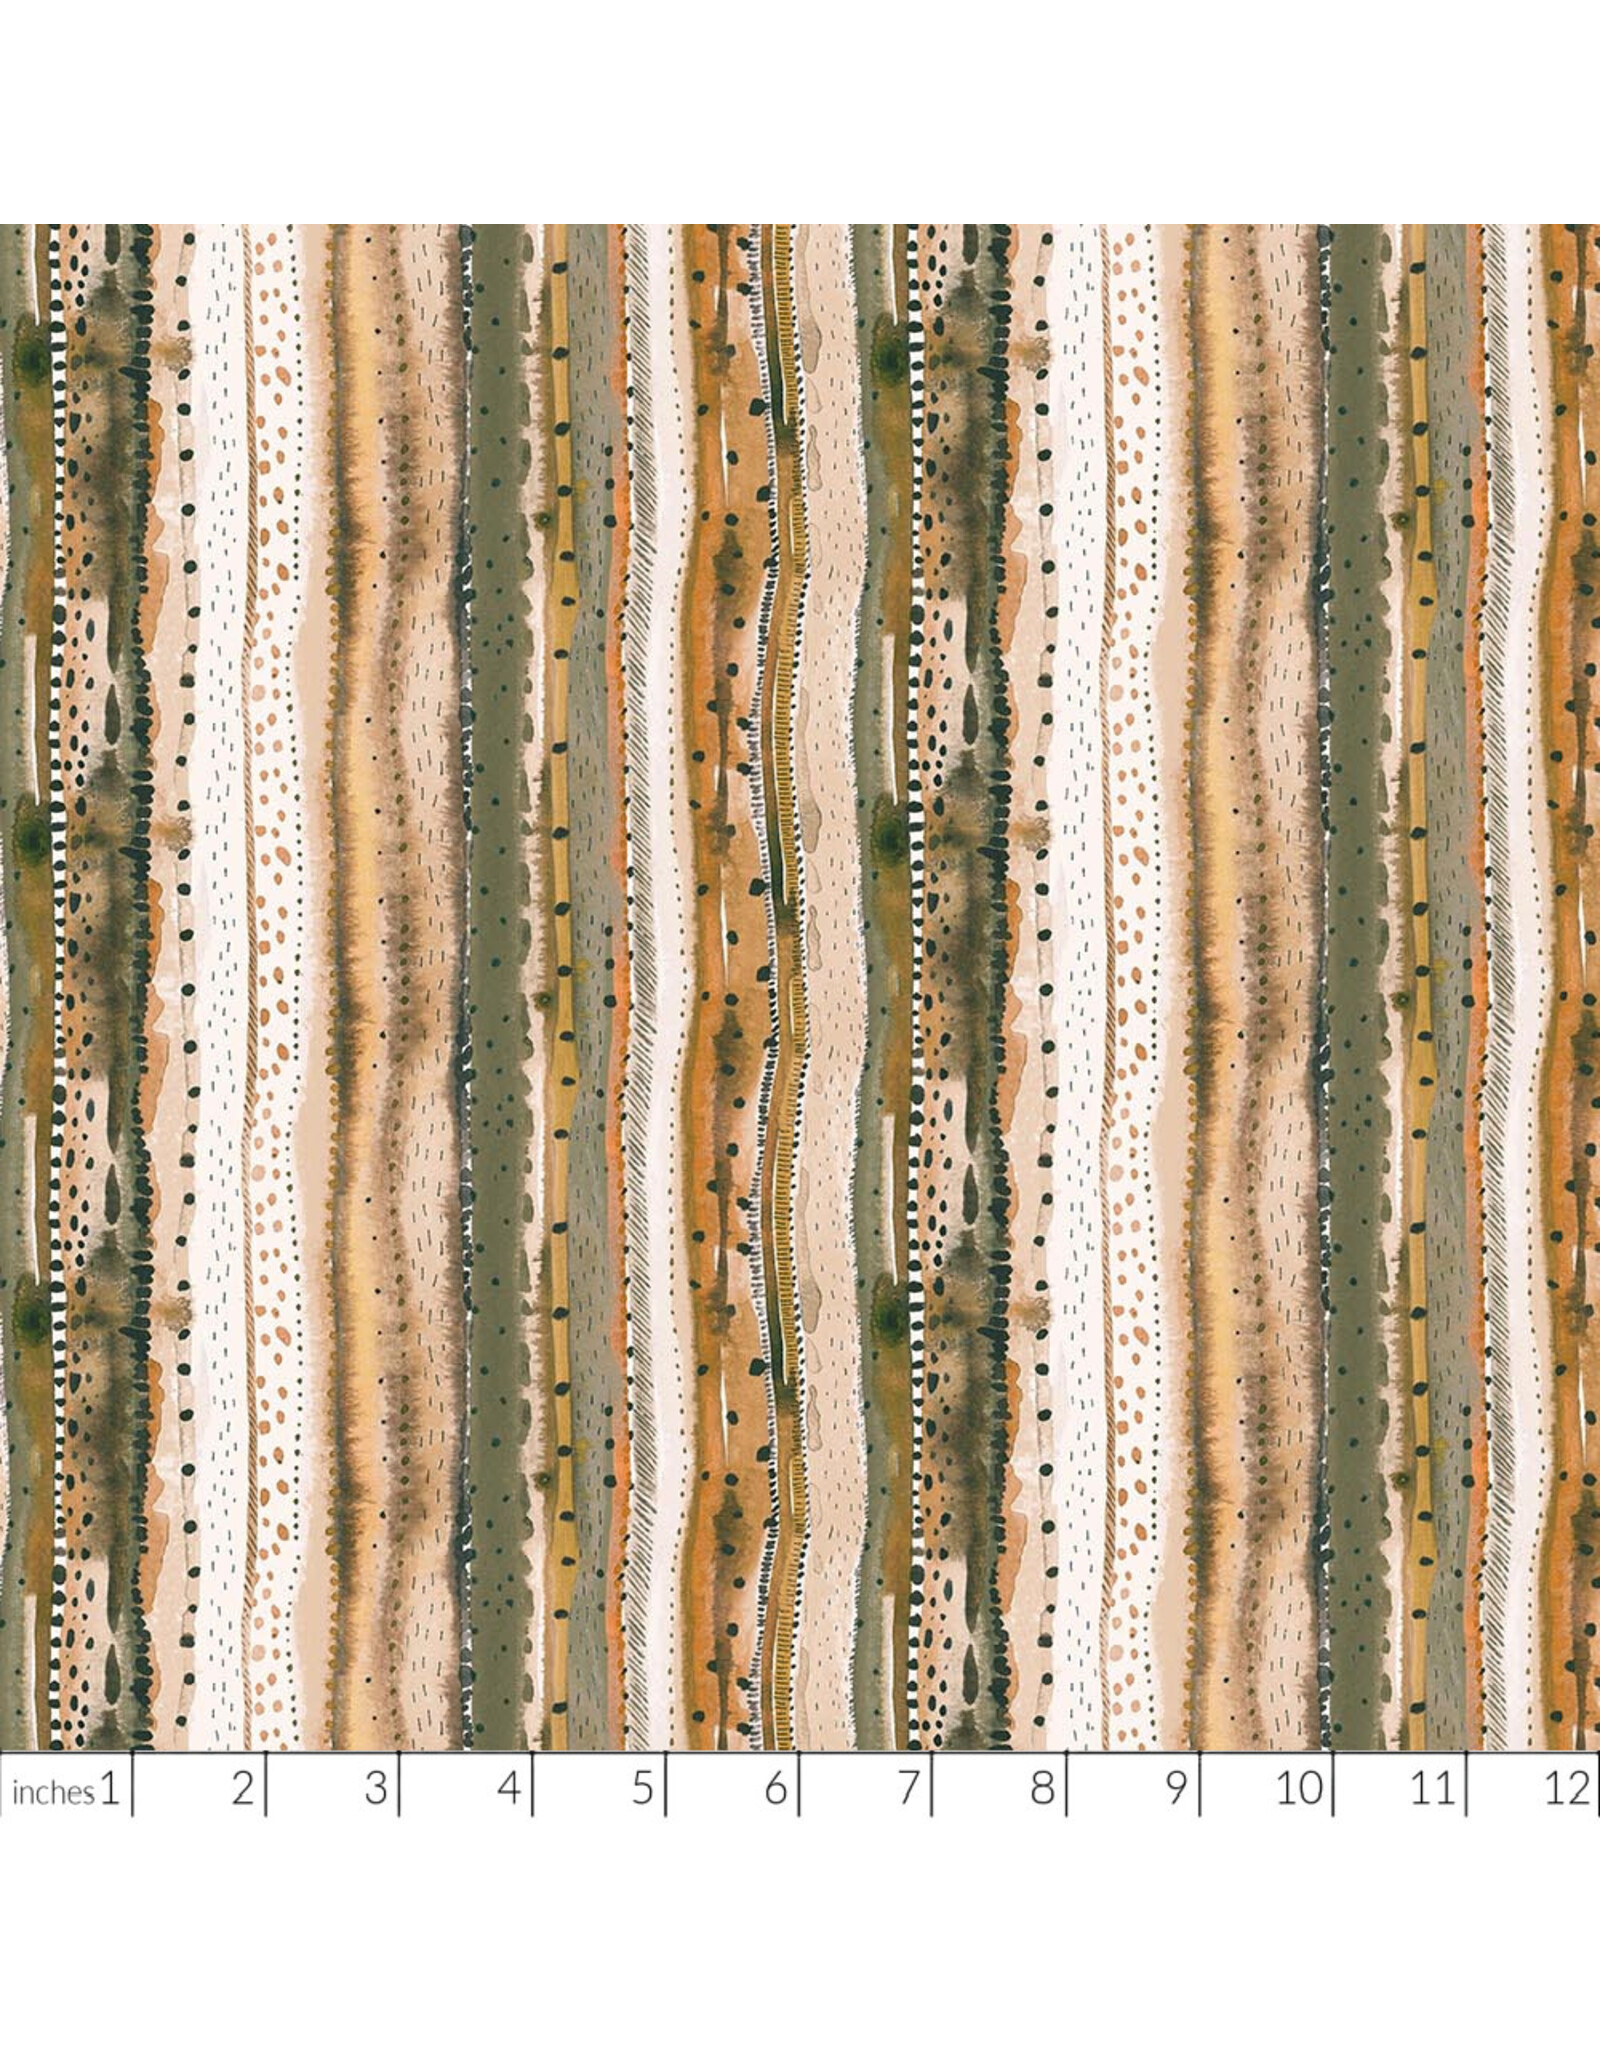 Figo Autumn Forage, Stripes in Gold, Fabric Half-Yards